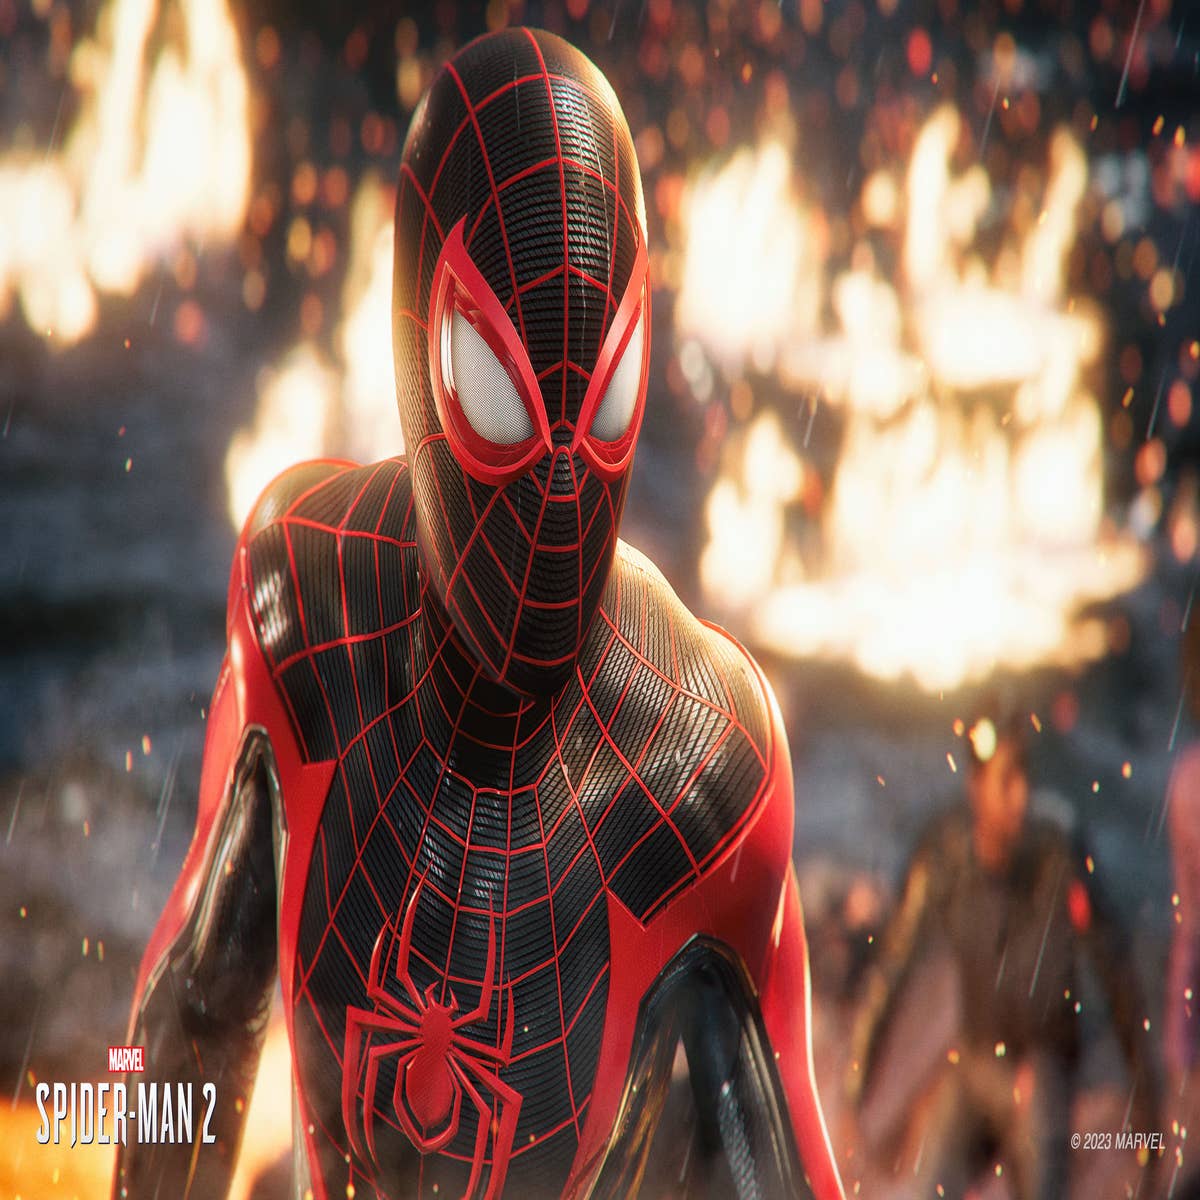 Spider-Man 2: Marvel's Spider-Man 2: Here's release date, gameplay